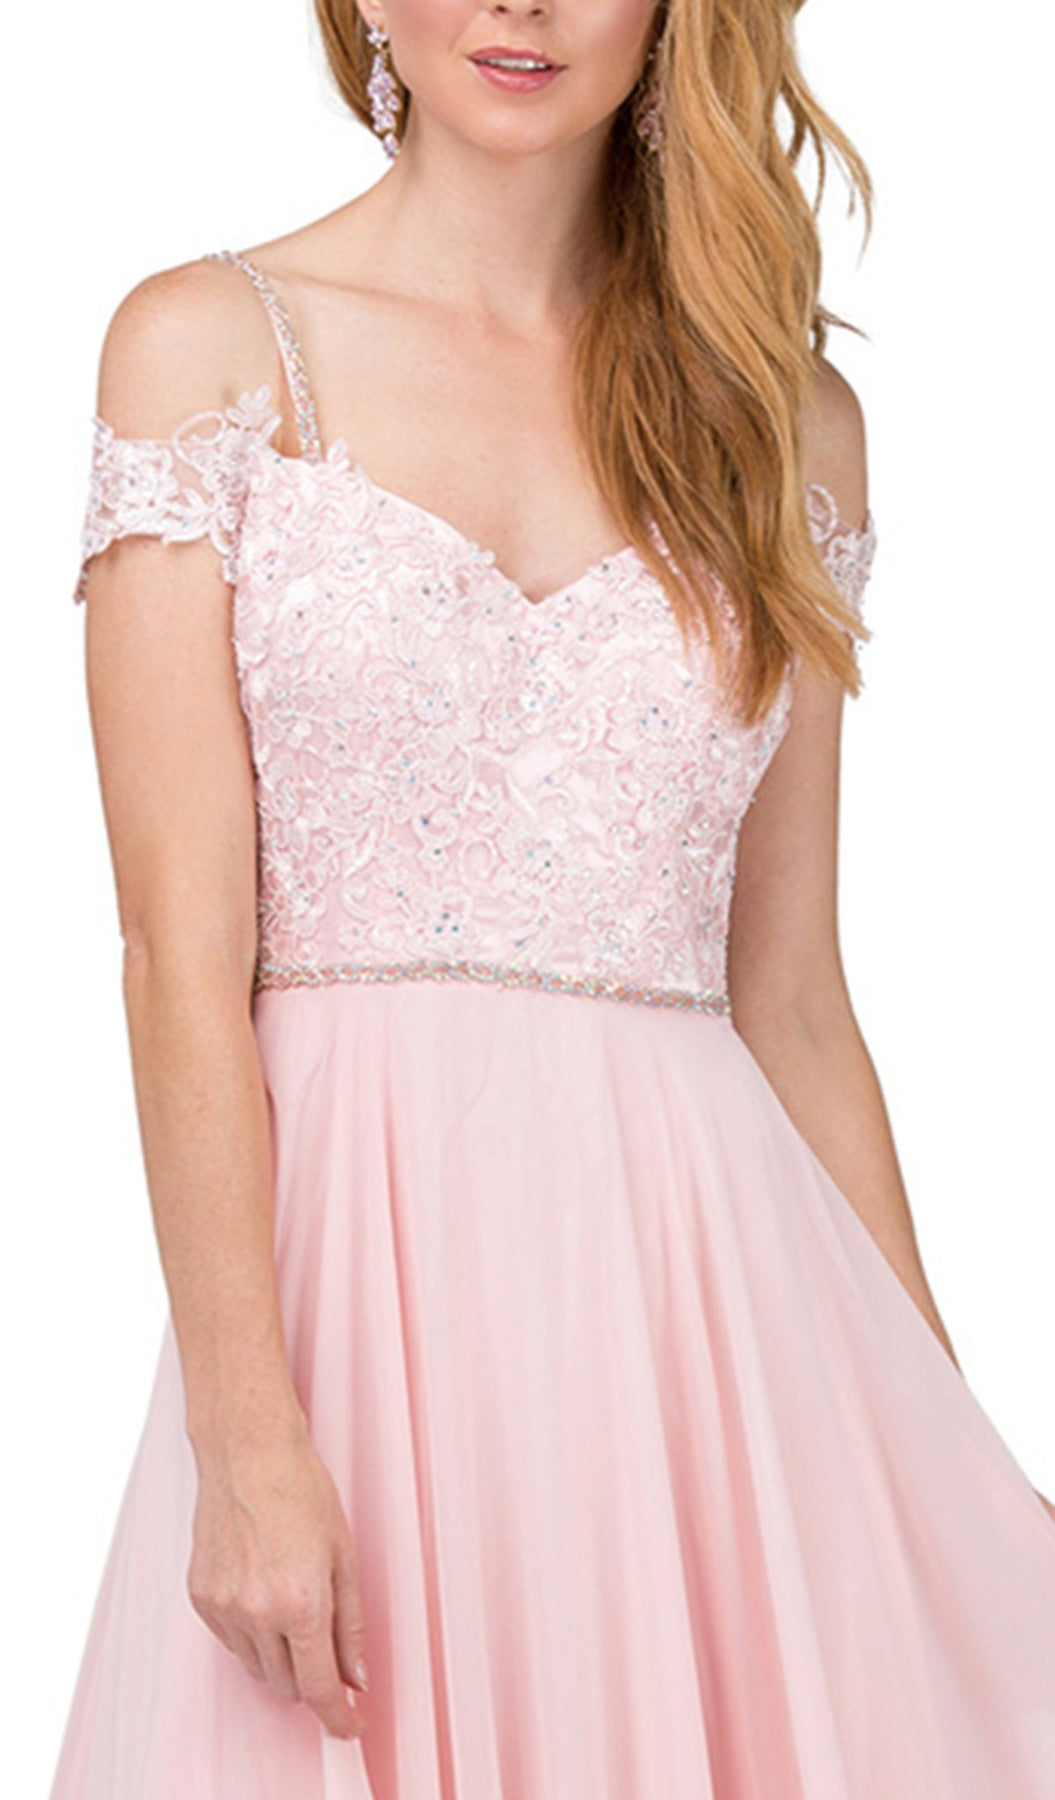 Dancing Queen - 2327 Embellished Off-Shoulder A-line Gown In Pink